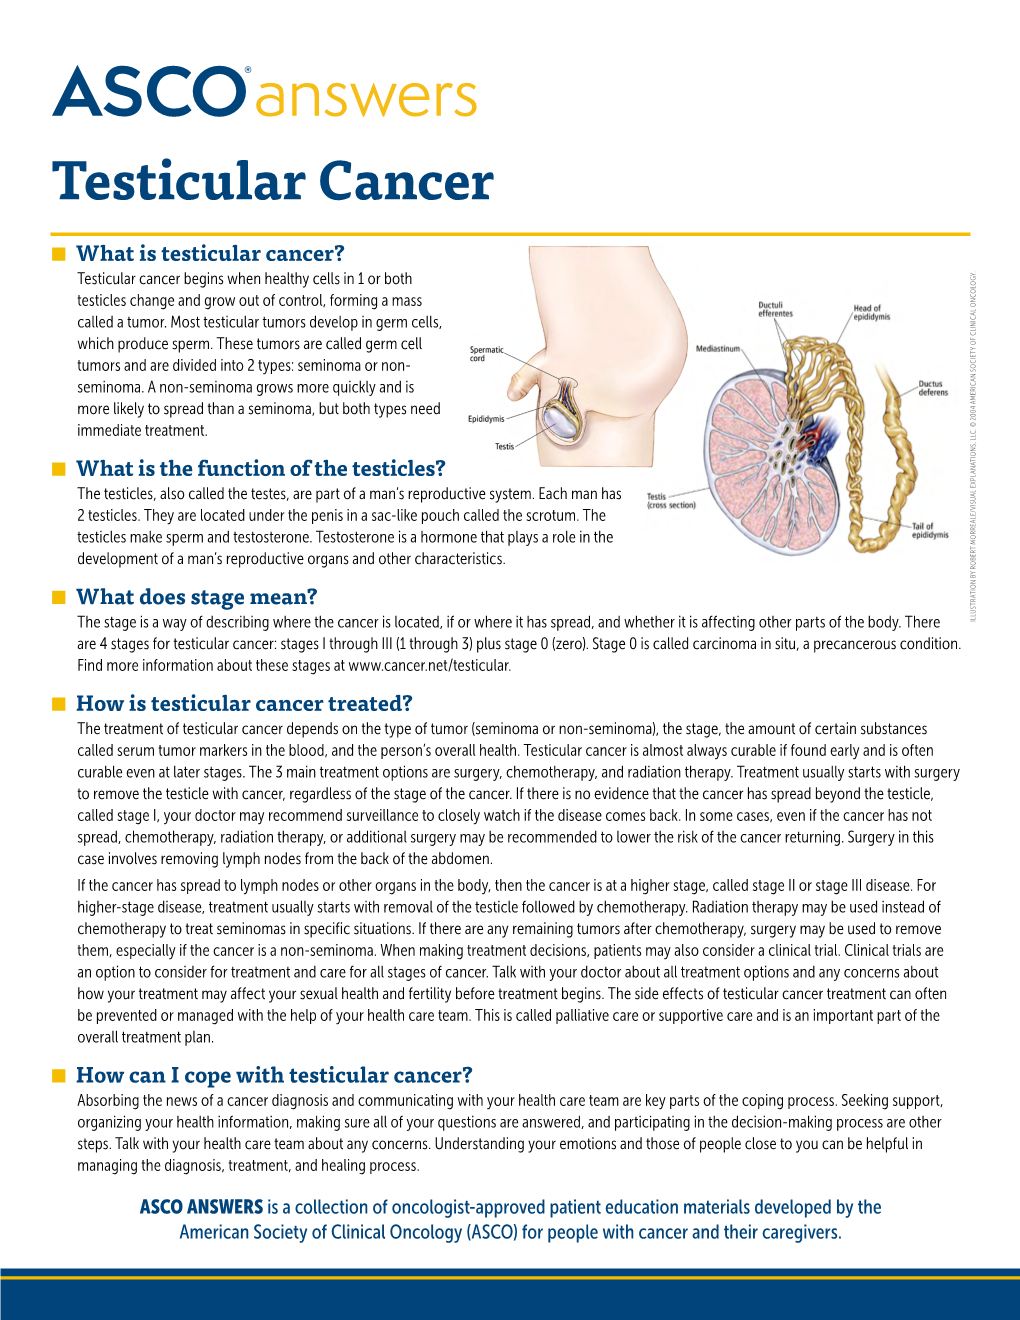 ASCO Answers: Testicular Cancer